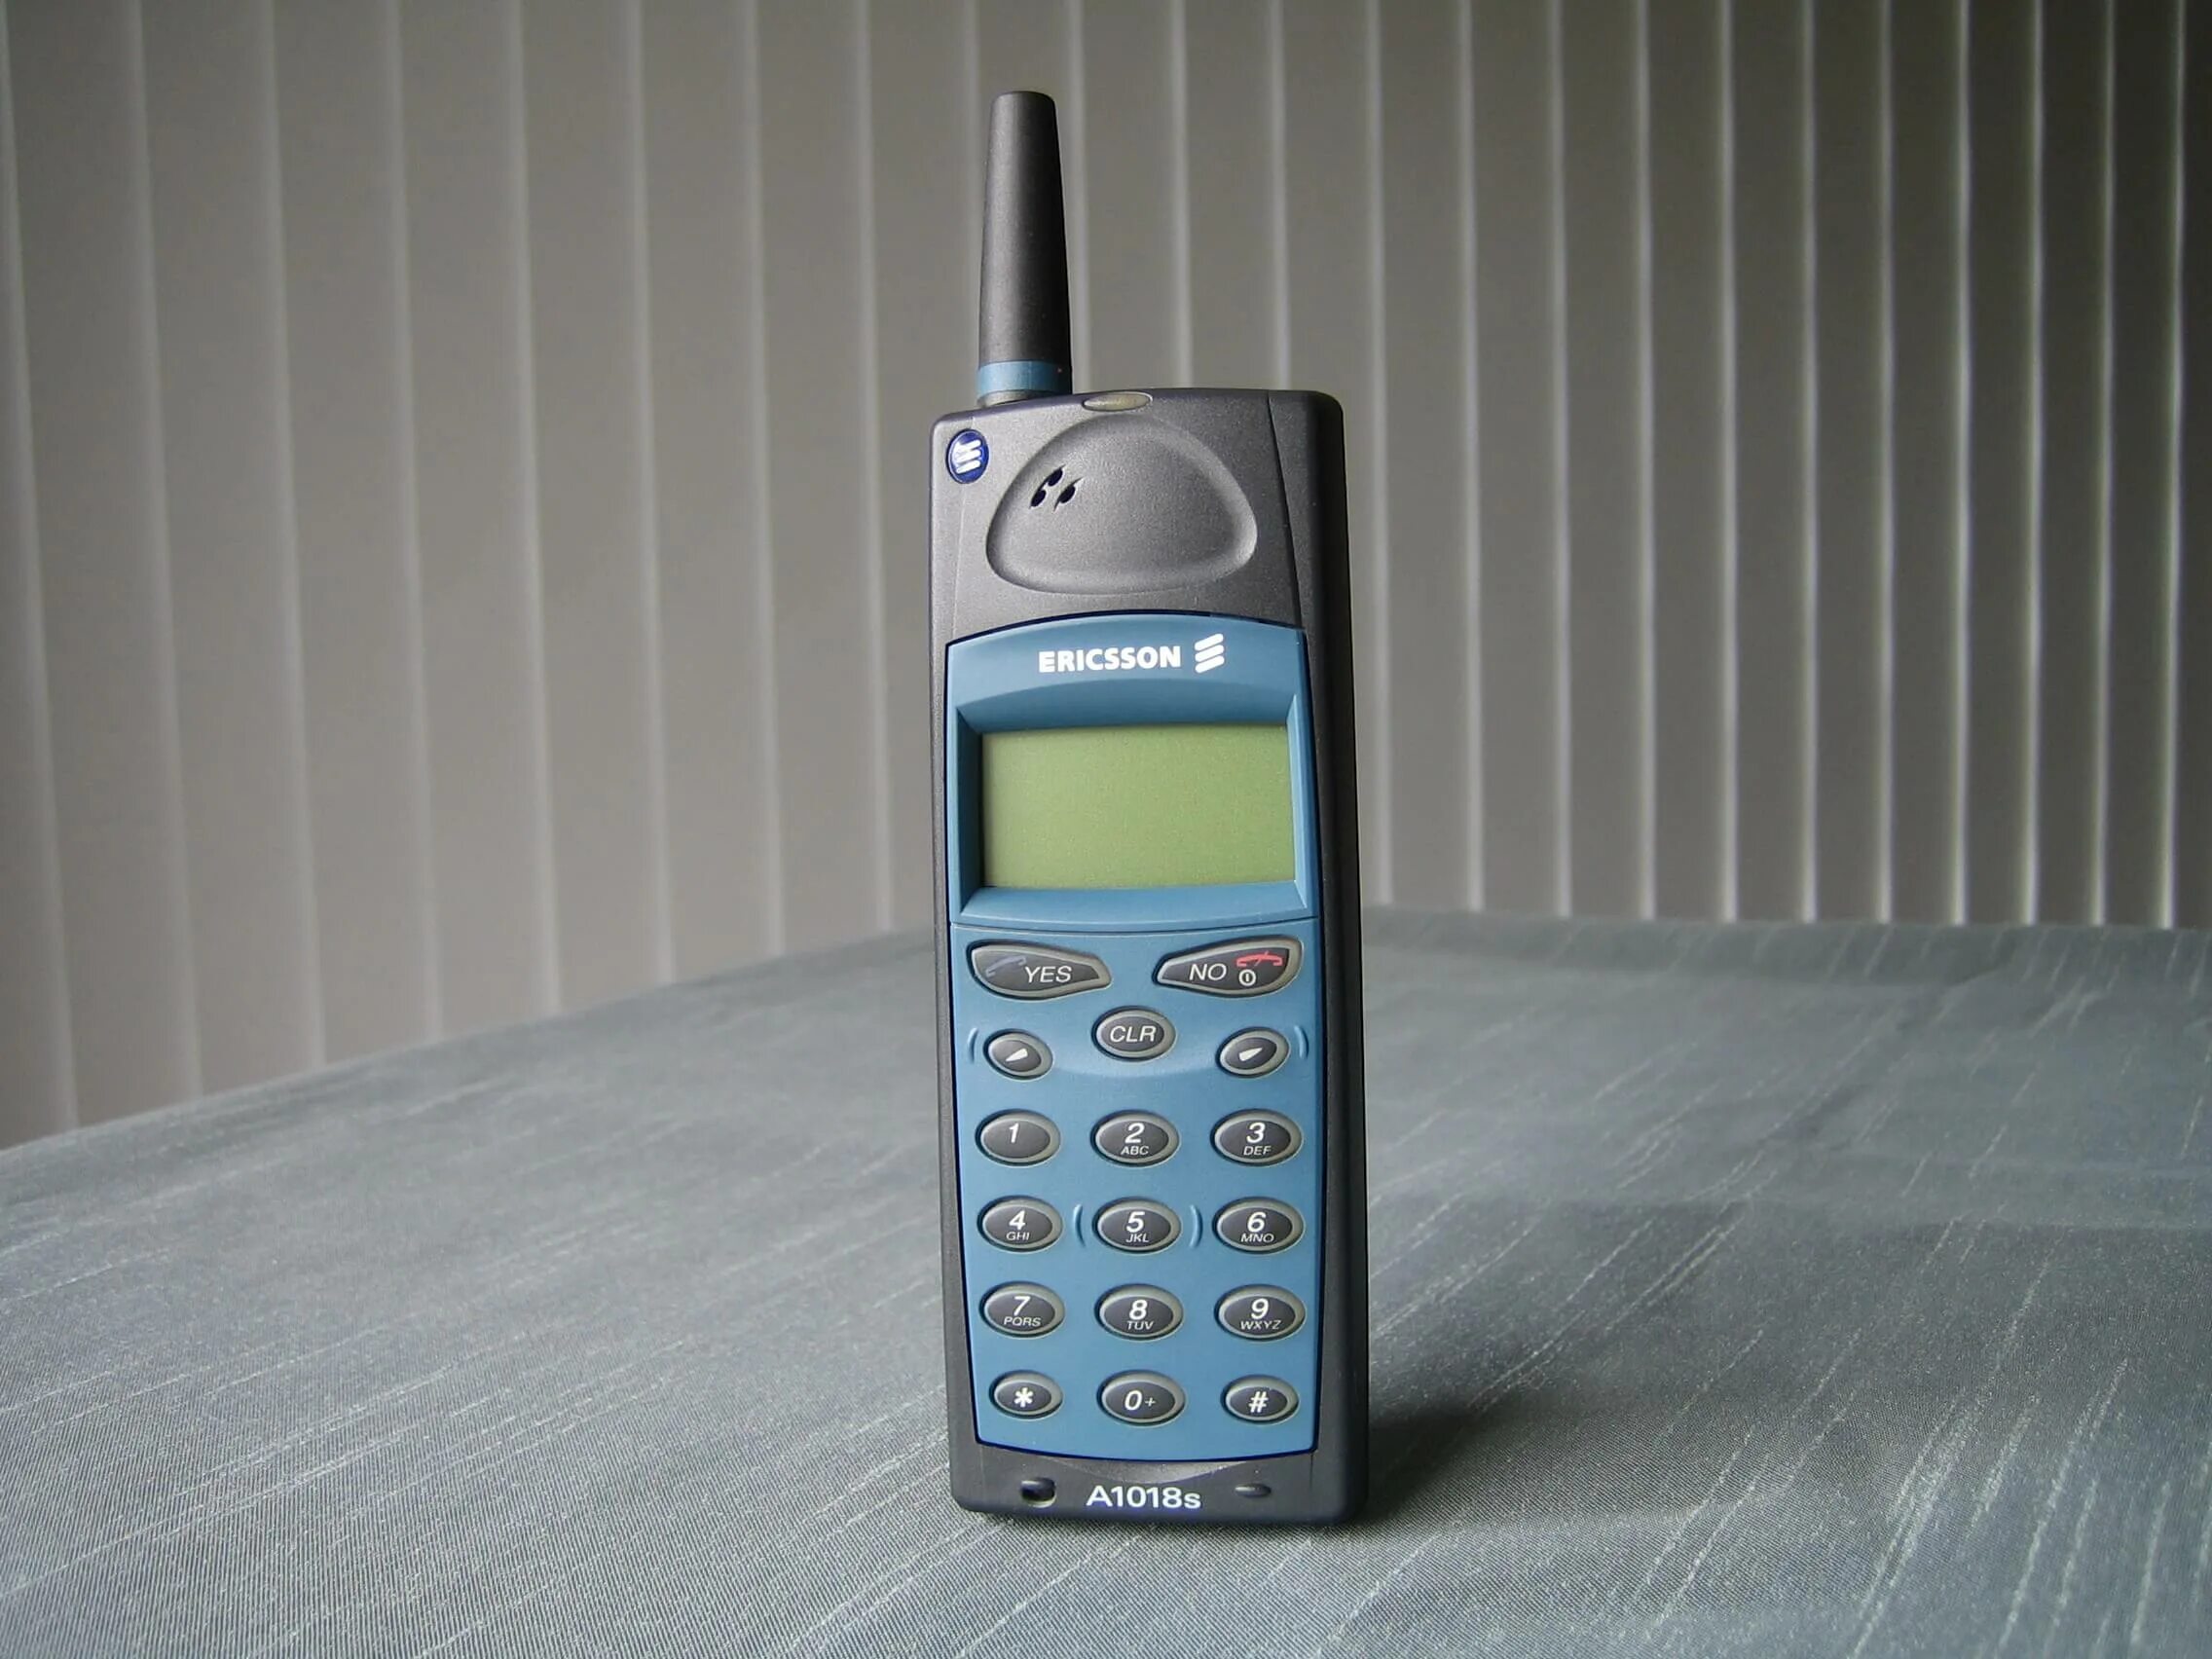 Ericsson a1018s. Сони Эриксон 1018. Sony Ericsson a1018s. Антенна Ericsson a1018s.